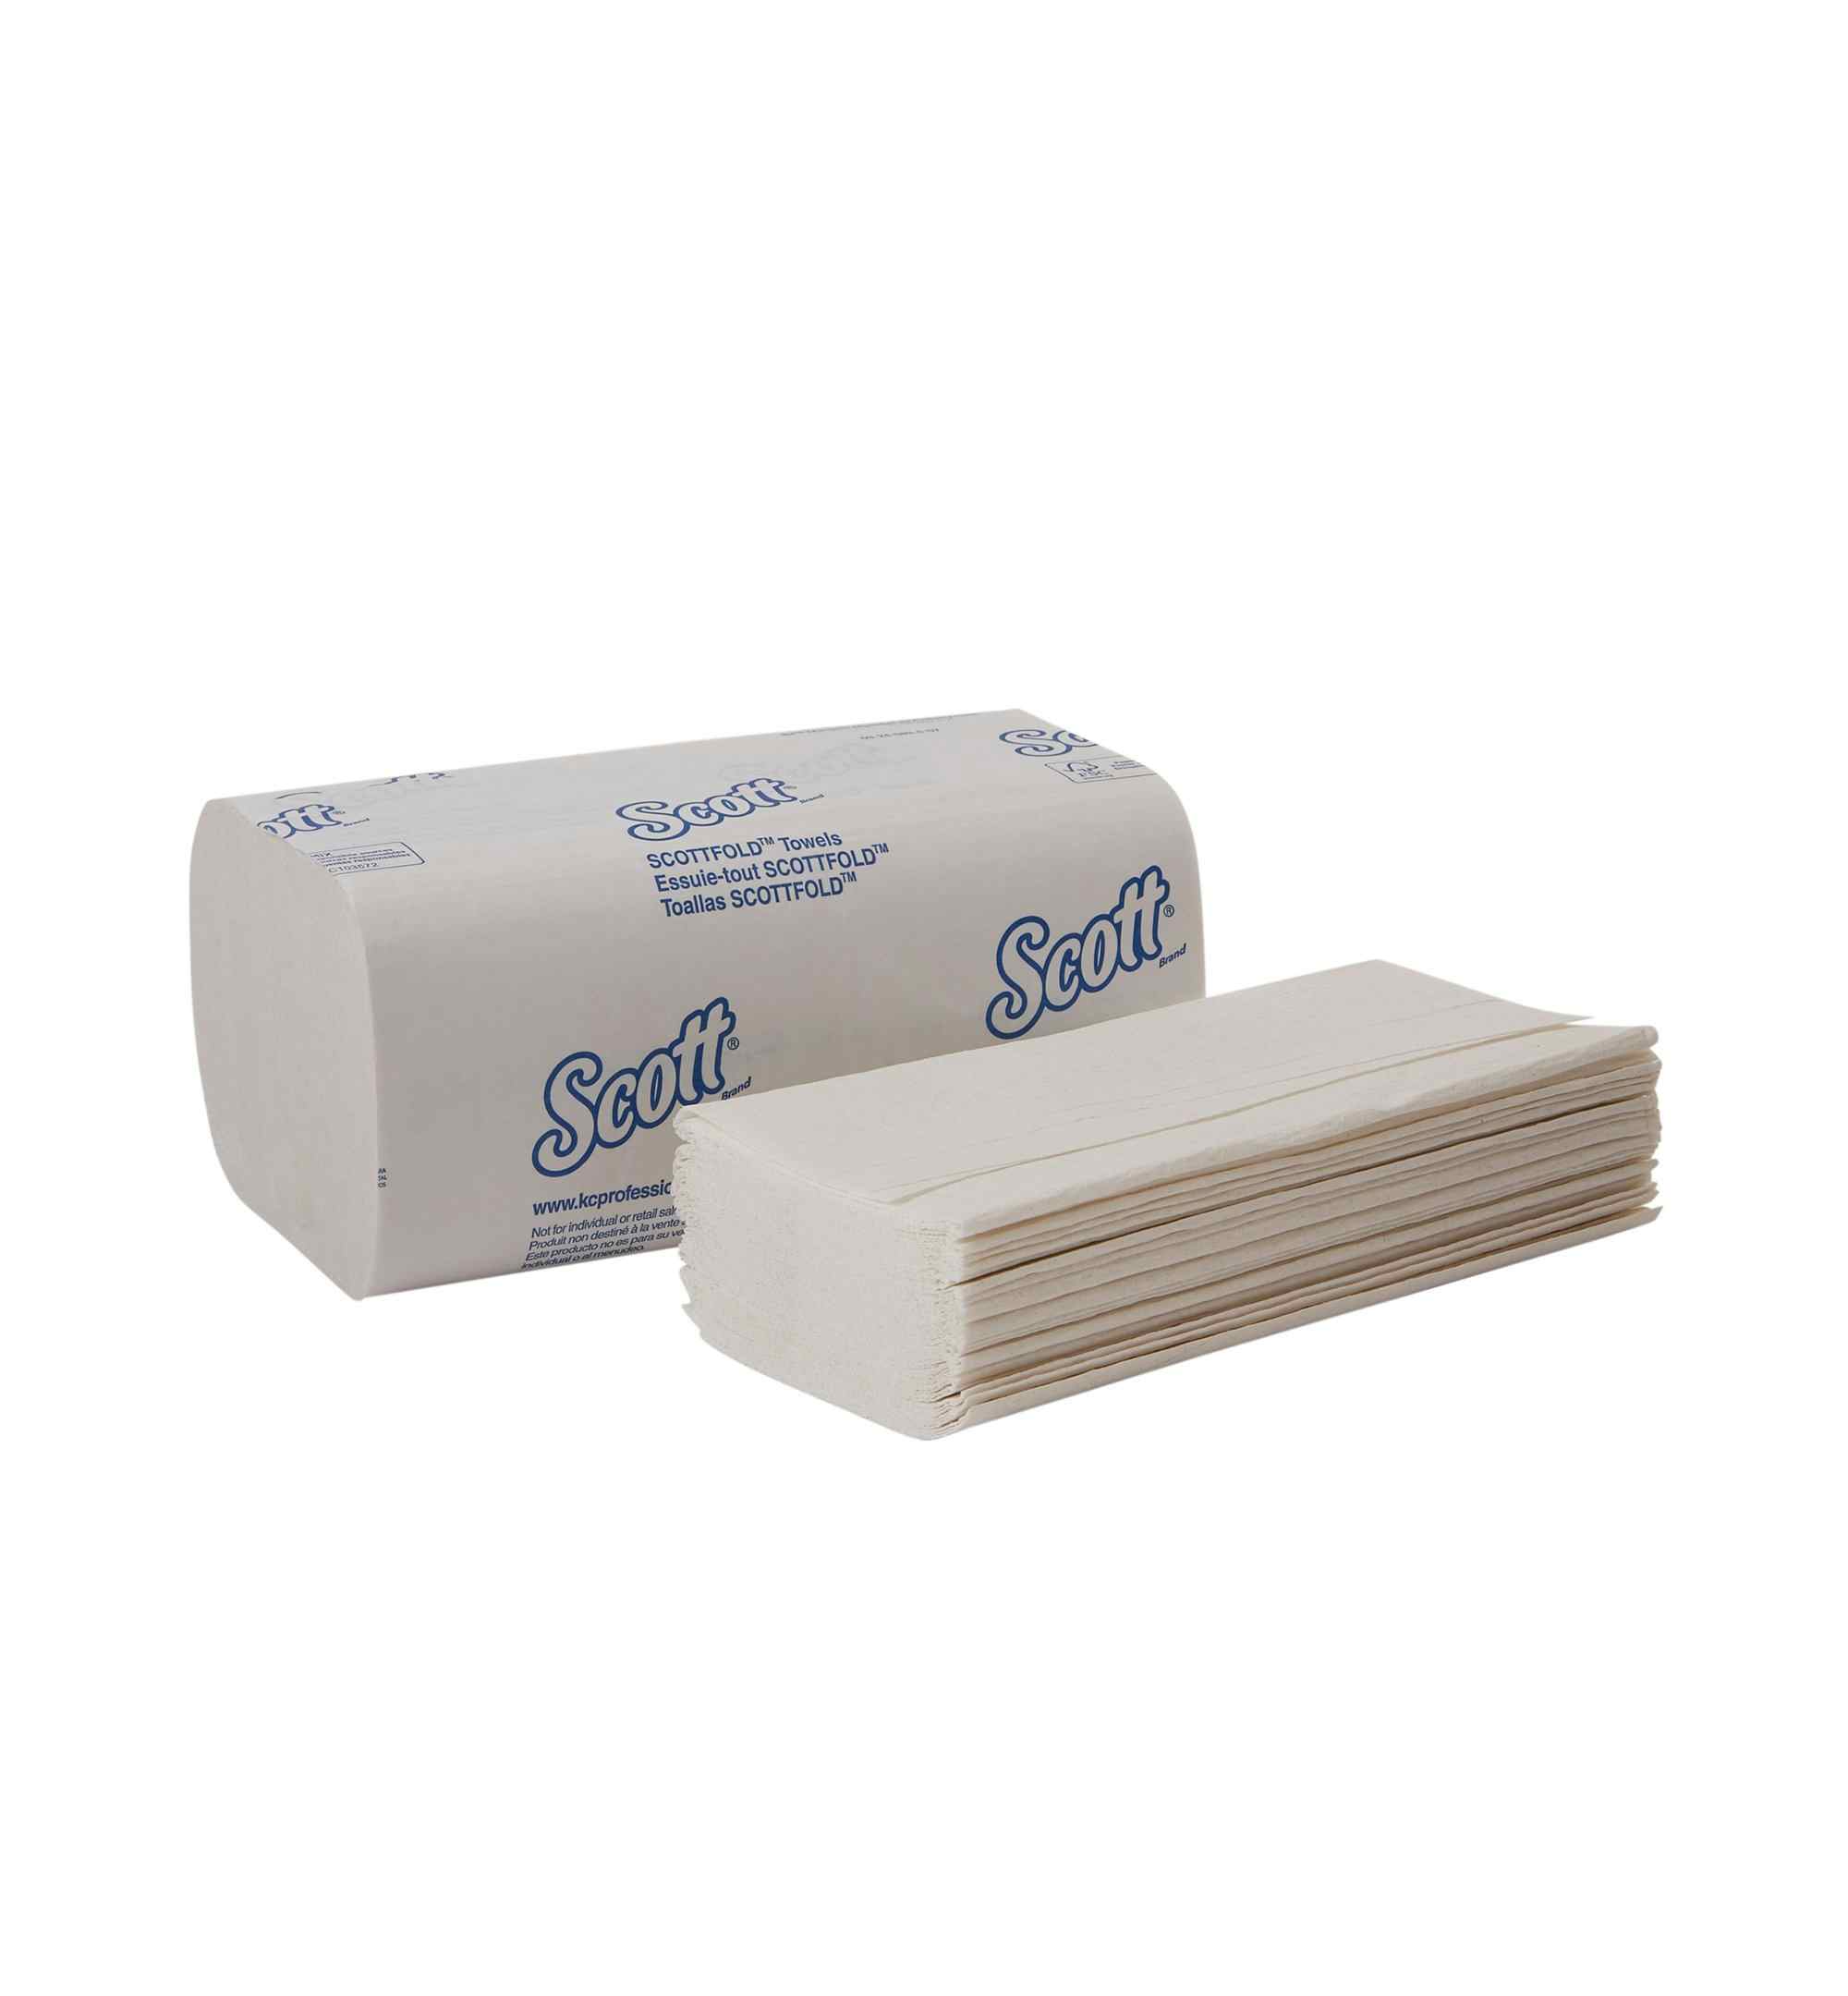 Scott Scottfold Multi-Fold Paper Towel, 01960, 1 Pack